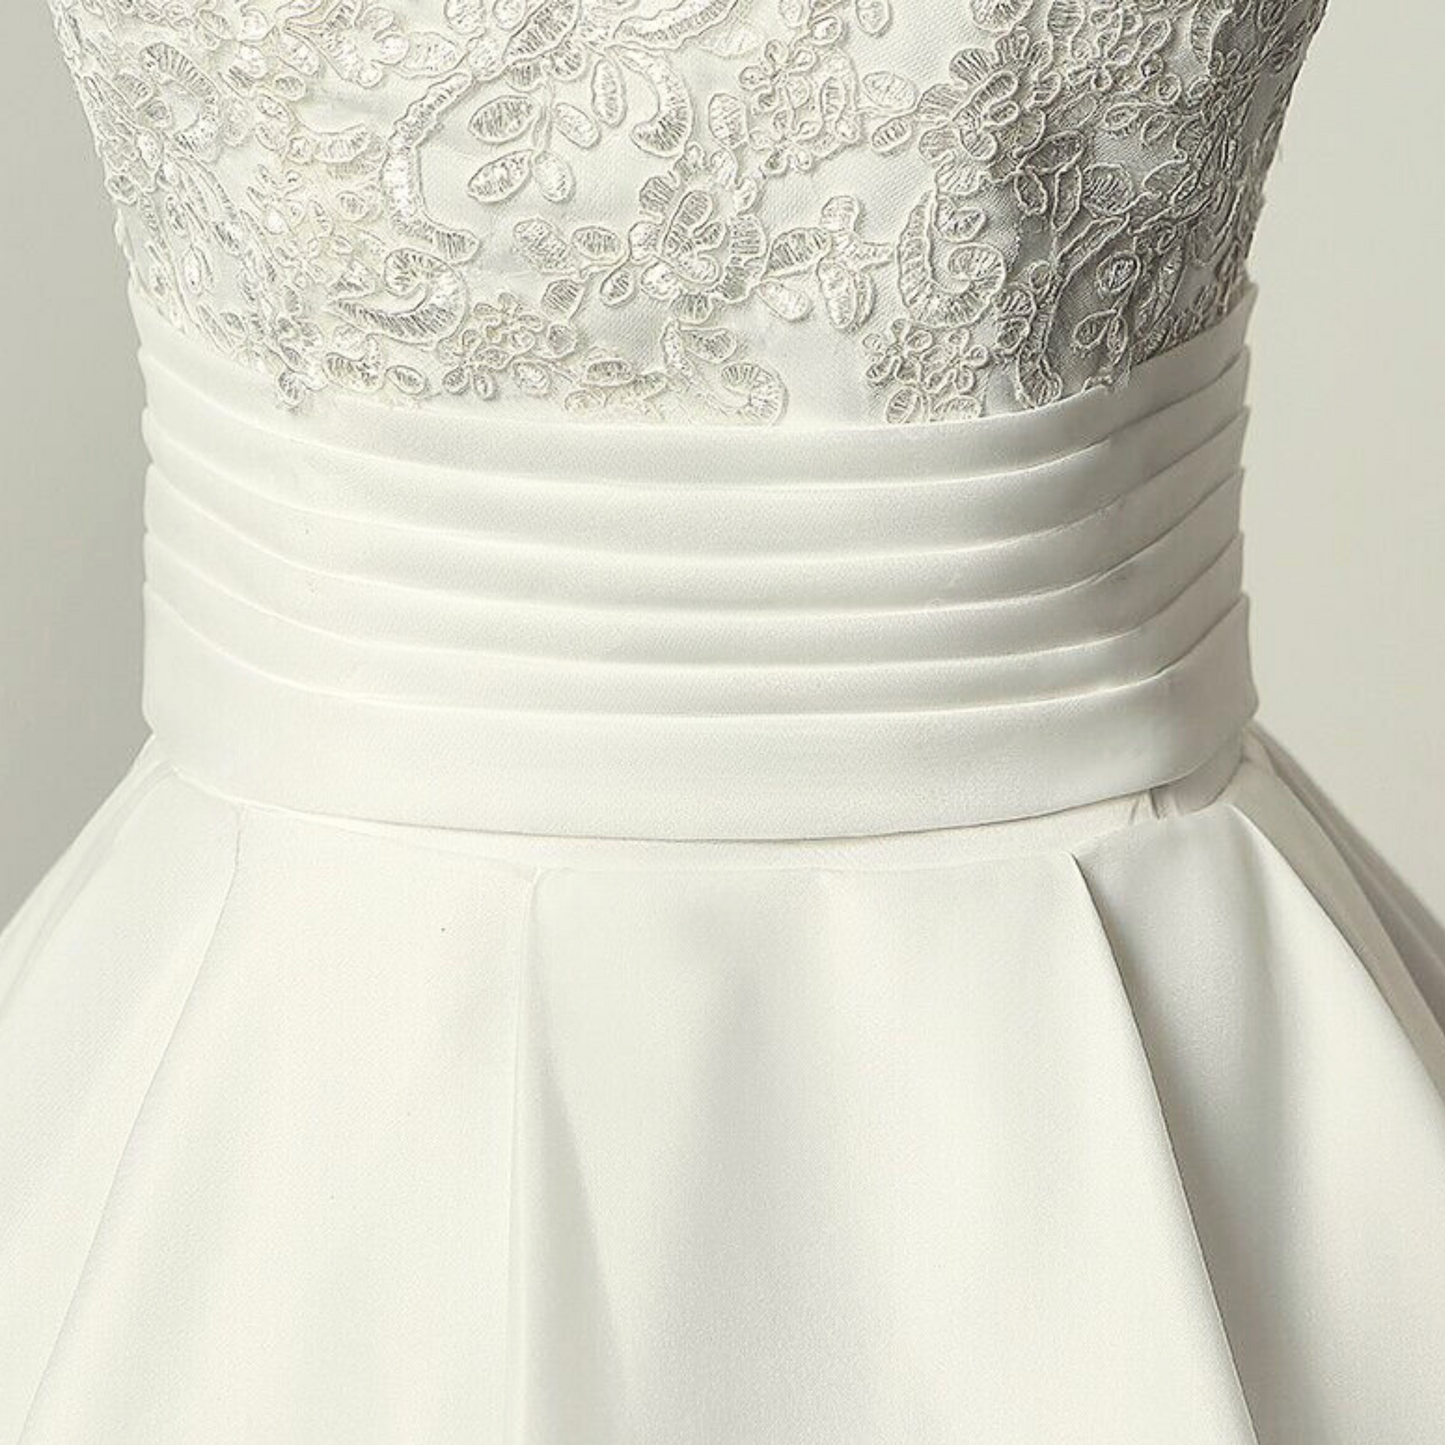 Embellished white Catholic wedding dress waist plate with a regal train.